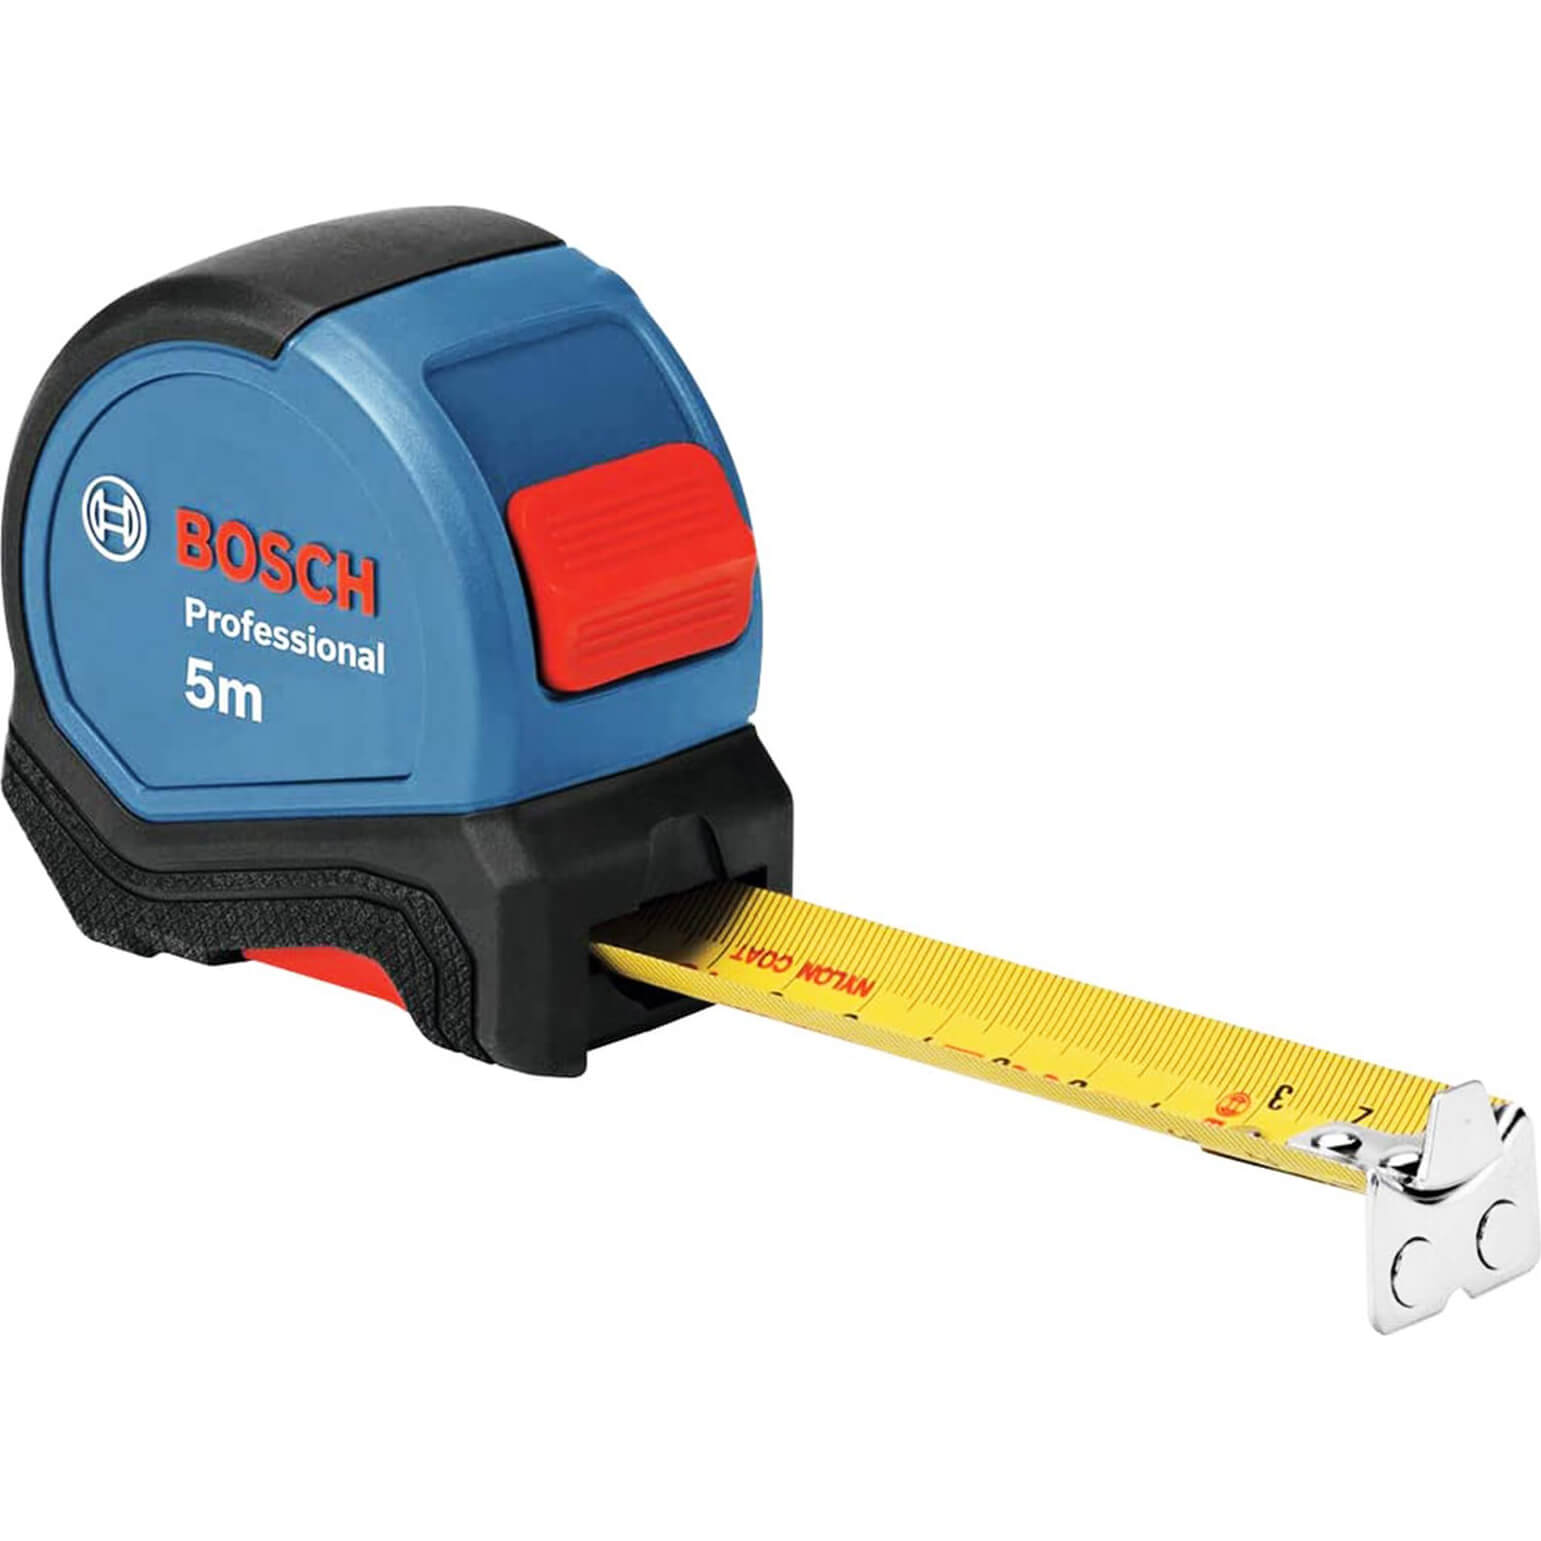 Photos - Tape Measure and Surveyor Tape Bosch Professional Tape Measure Metric Metric 5m 27mm 1600A016BH 